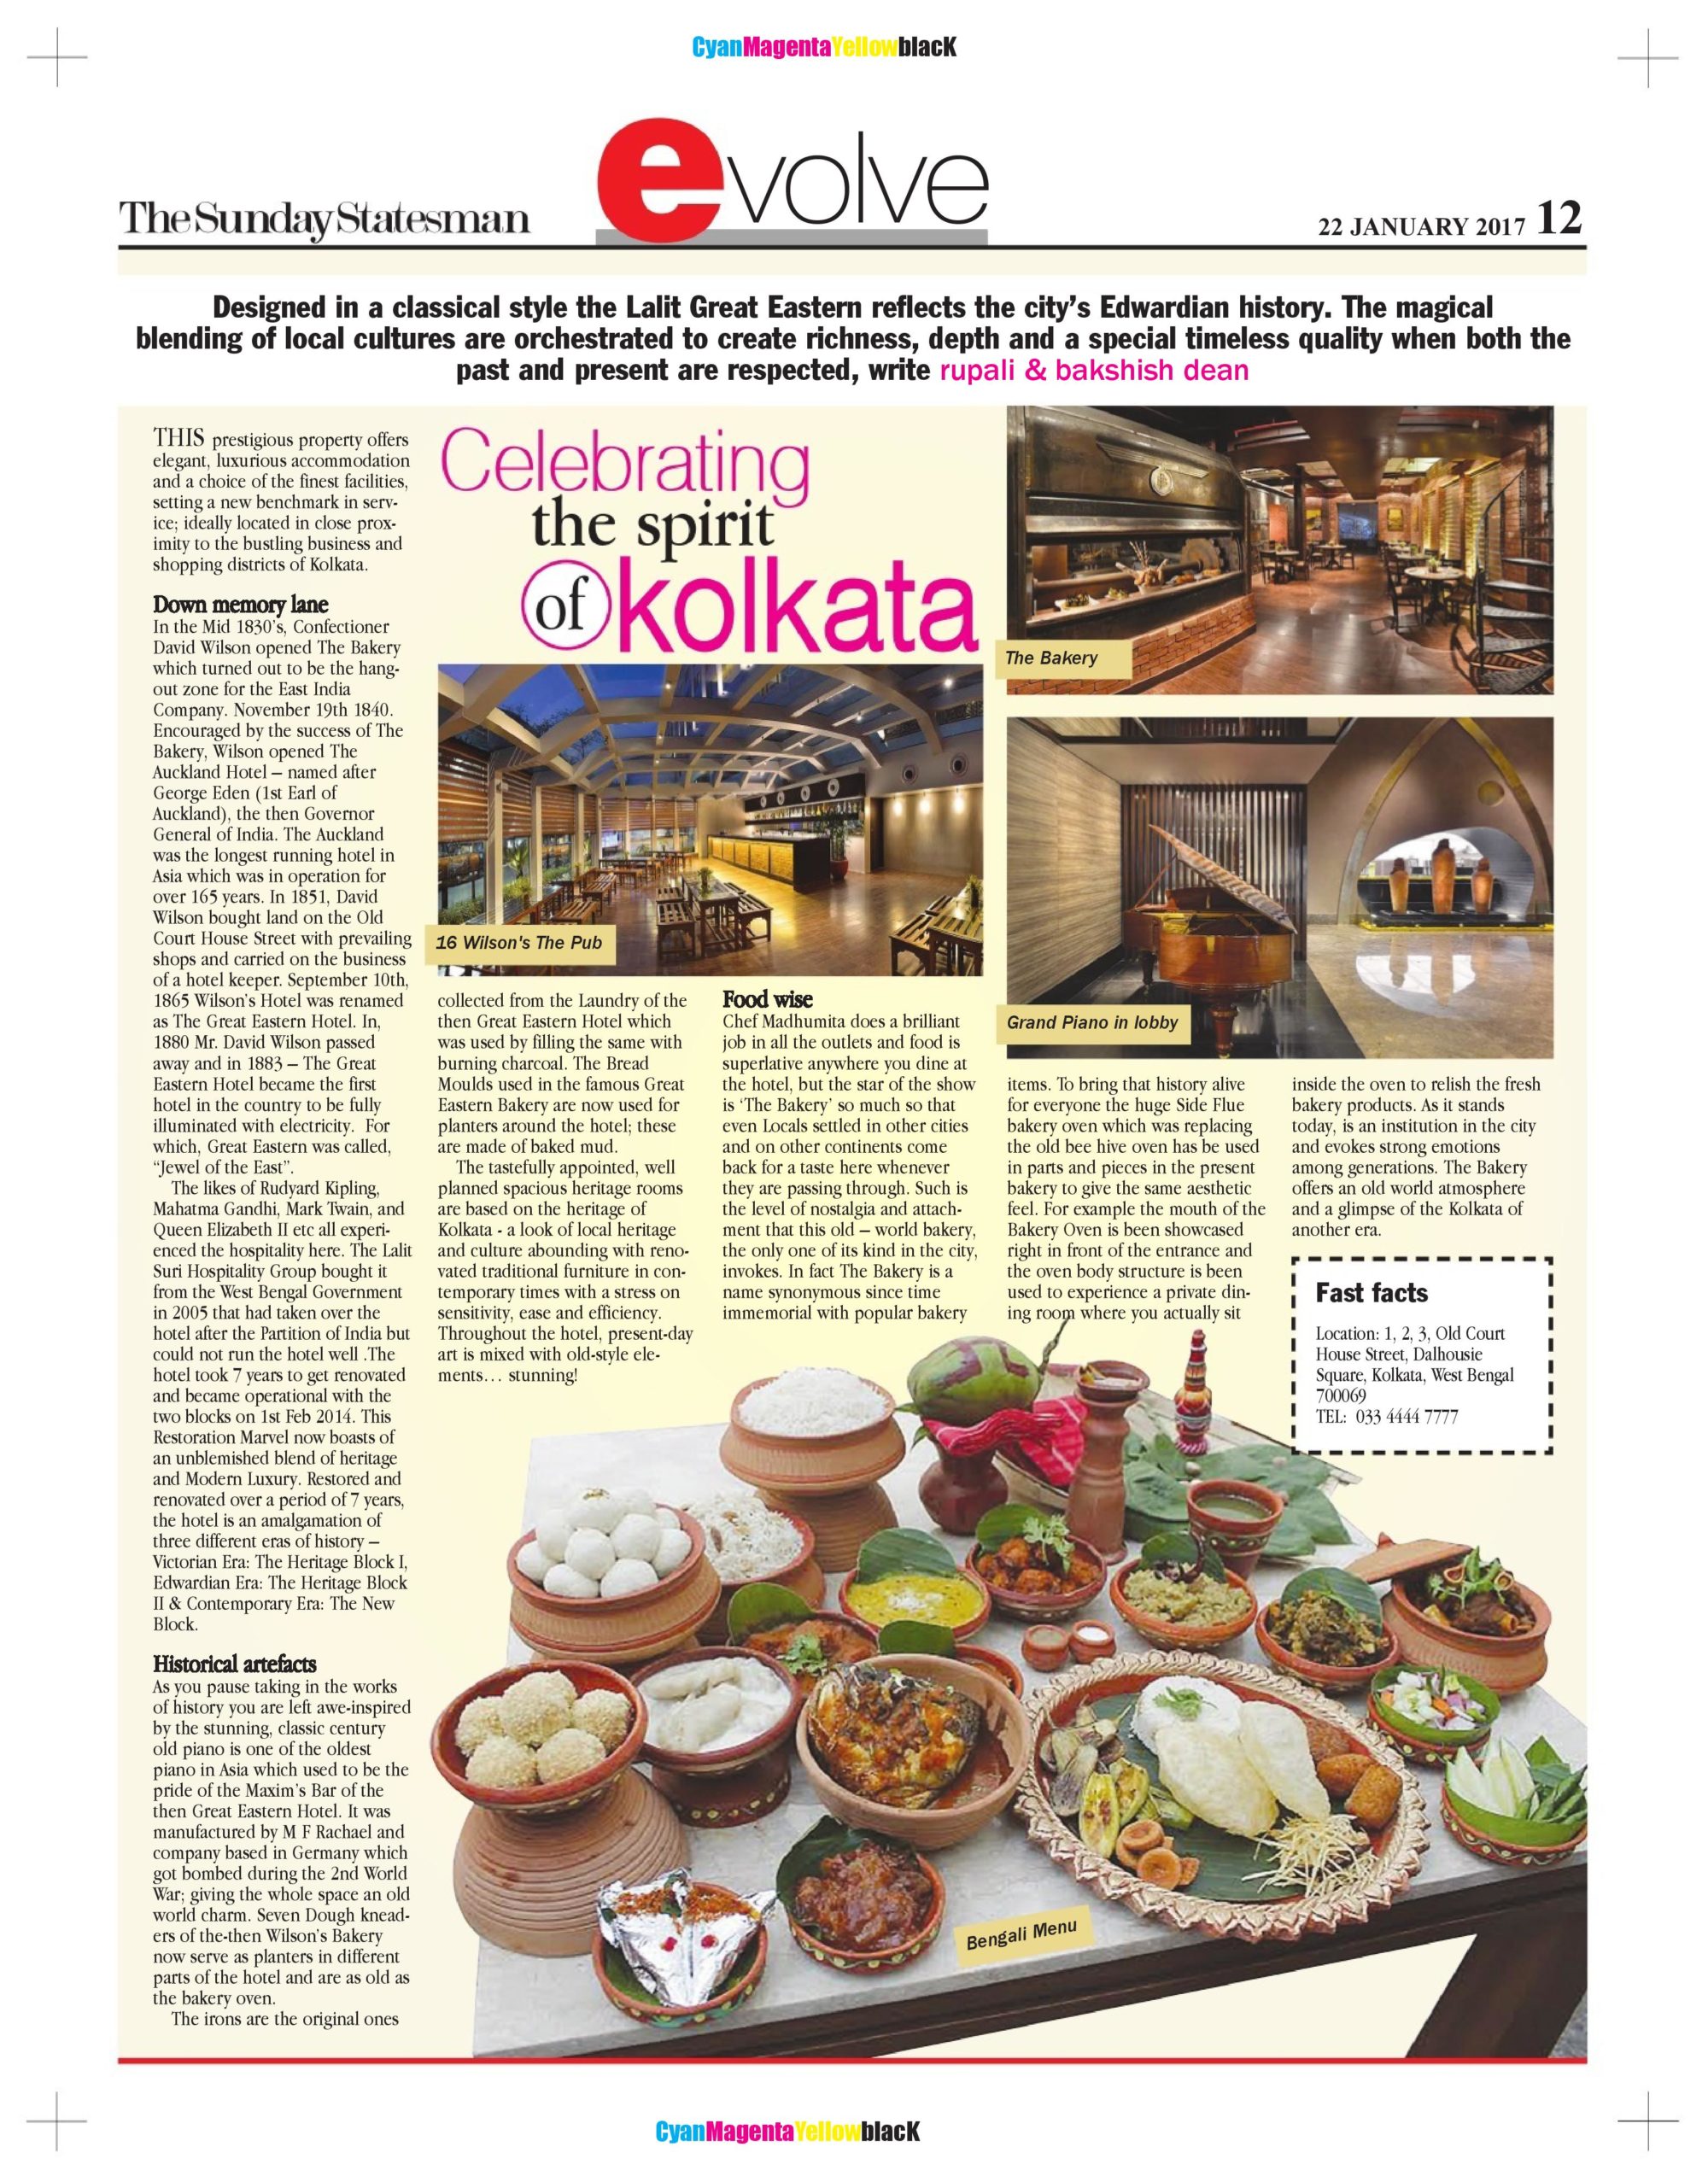 Celebrating the spirit of Kolkata